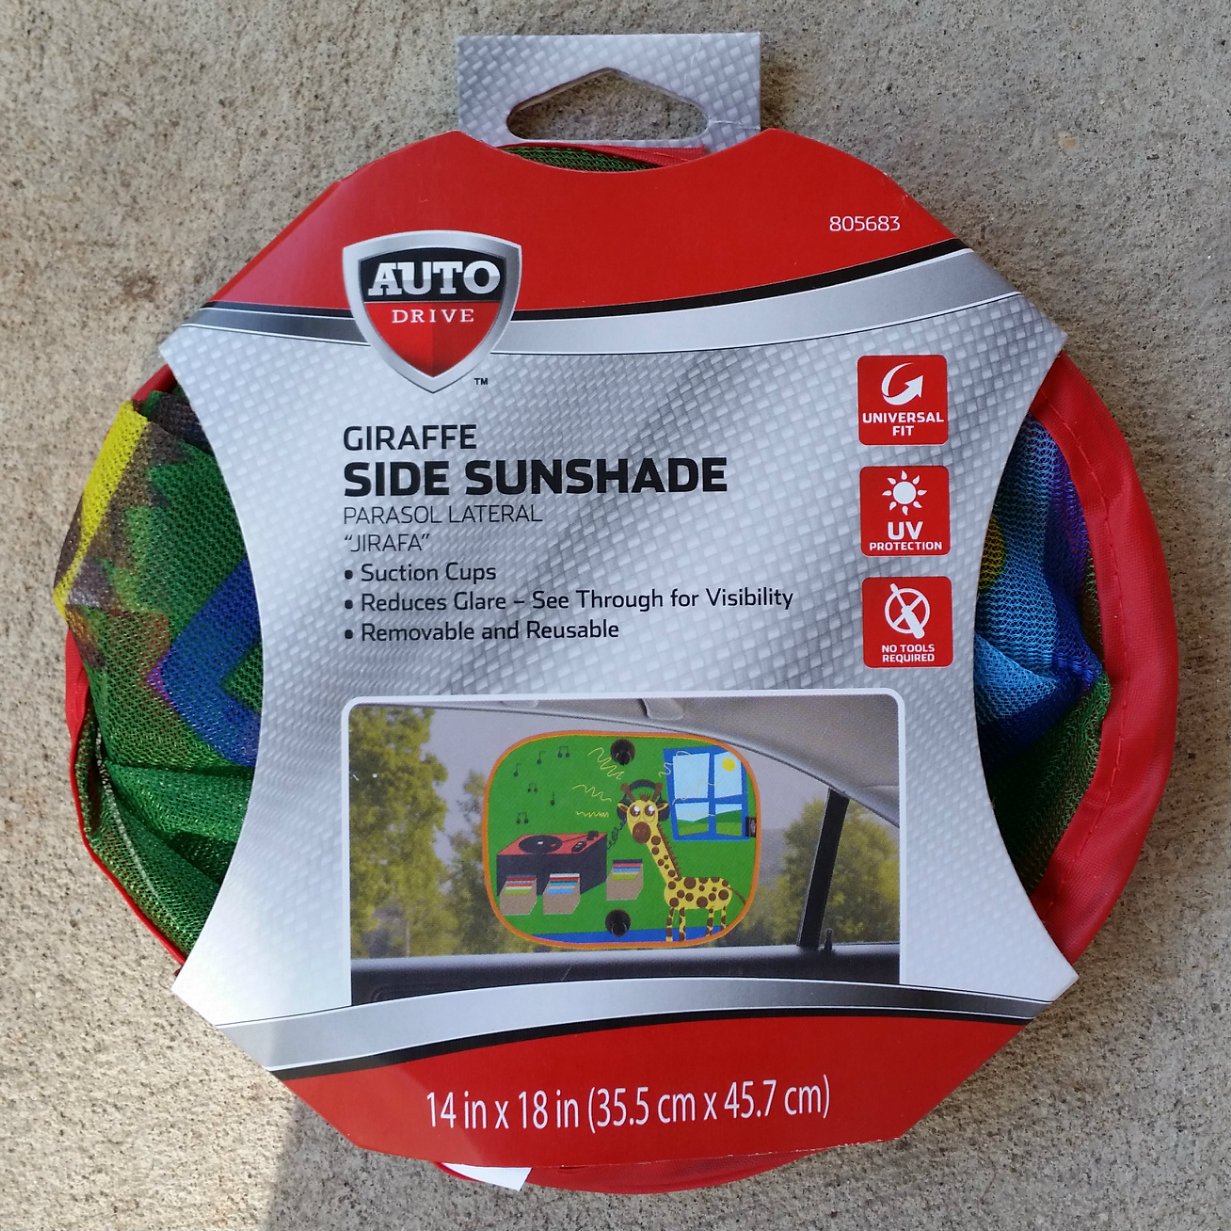 Drive Auto Products Auto Drive Giraffe Side Window Sunshade - Universal Fit